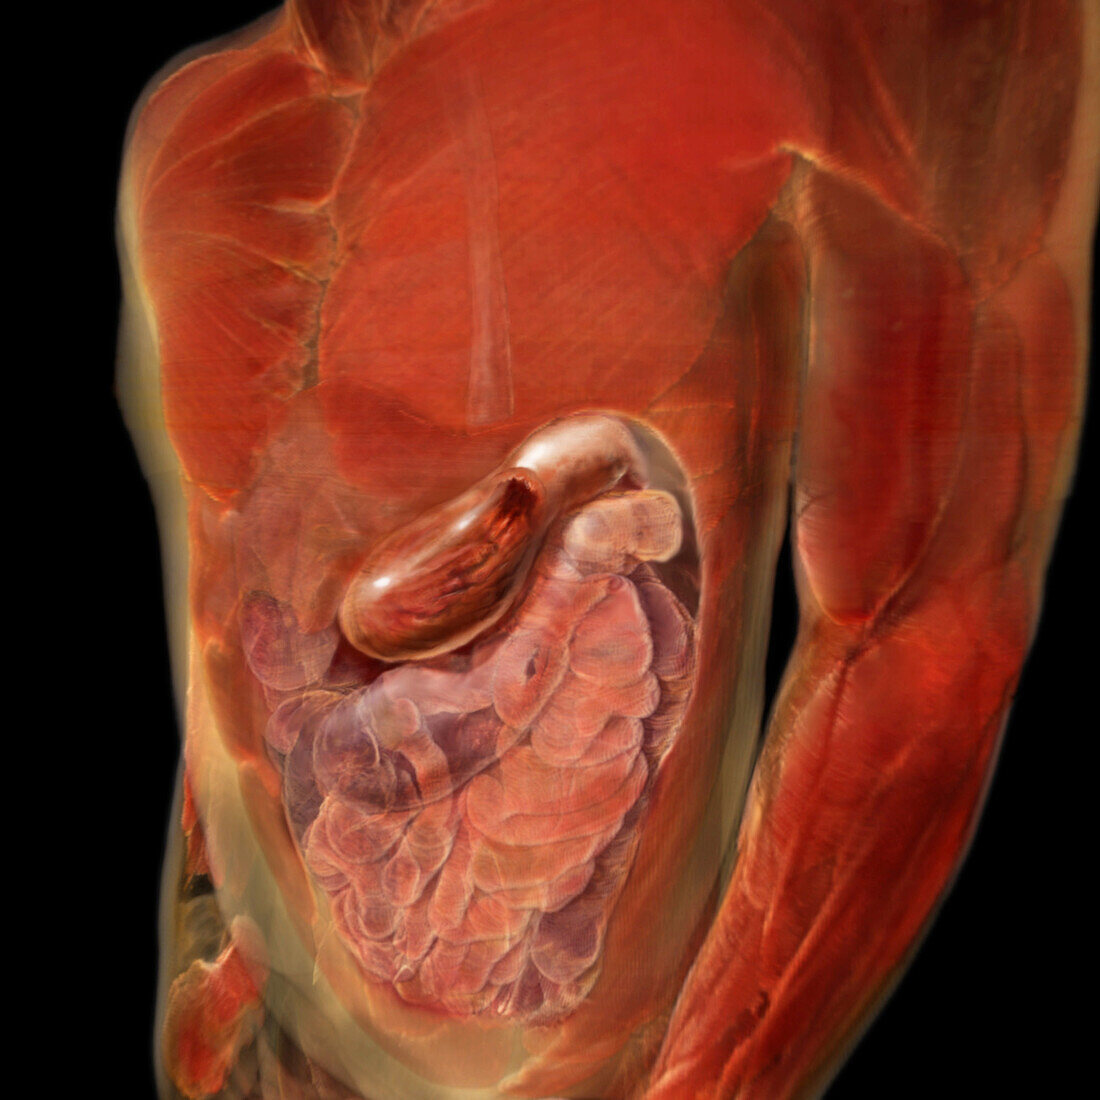 Abdomen Revealing Digestive Organs